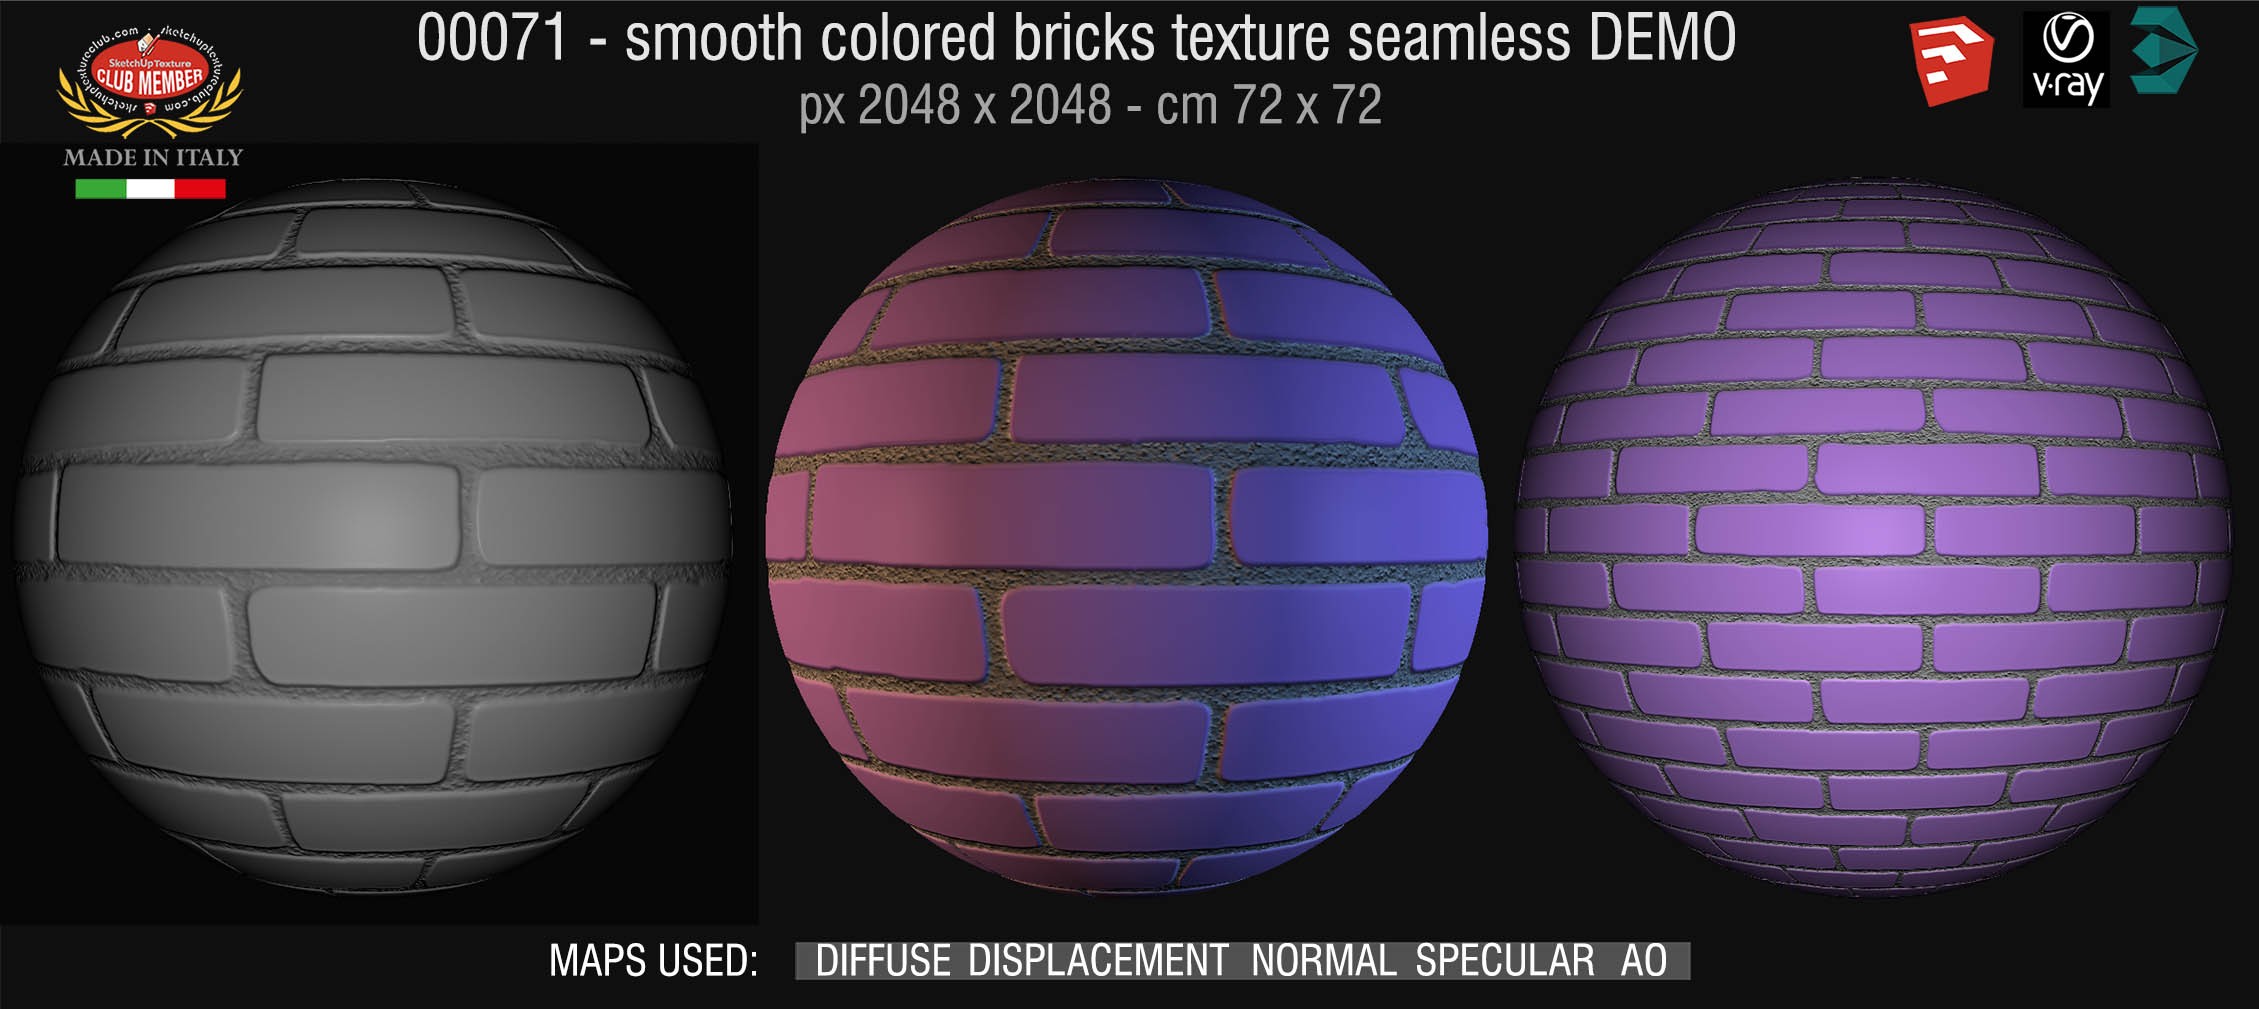 00071 smooth colored bricks texture seamless + maps DEMO